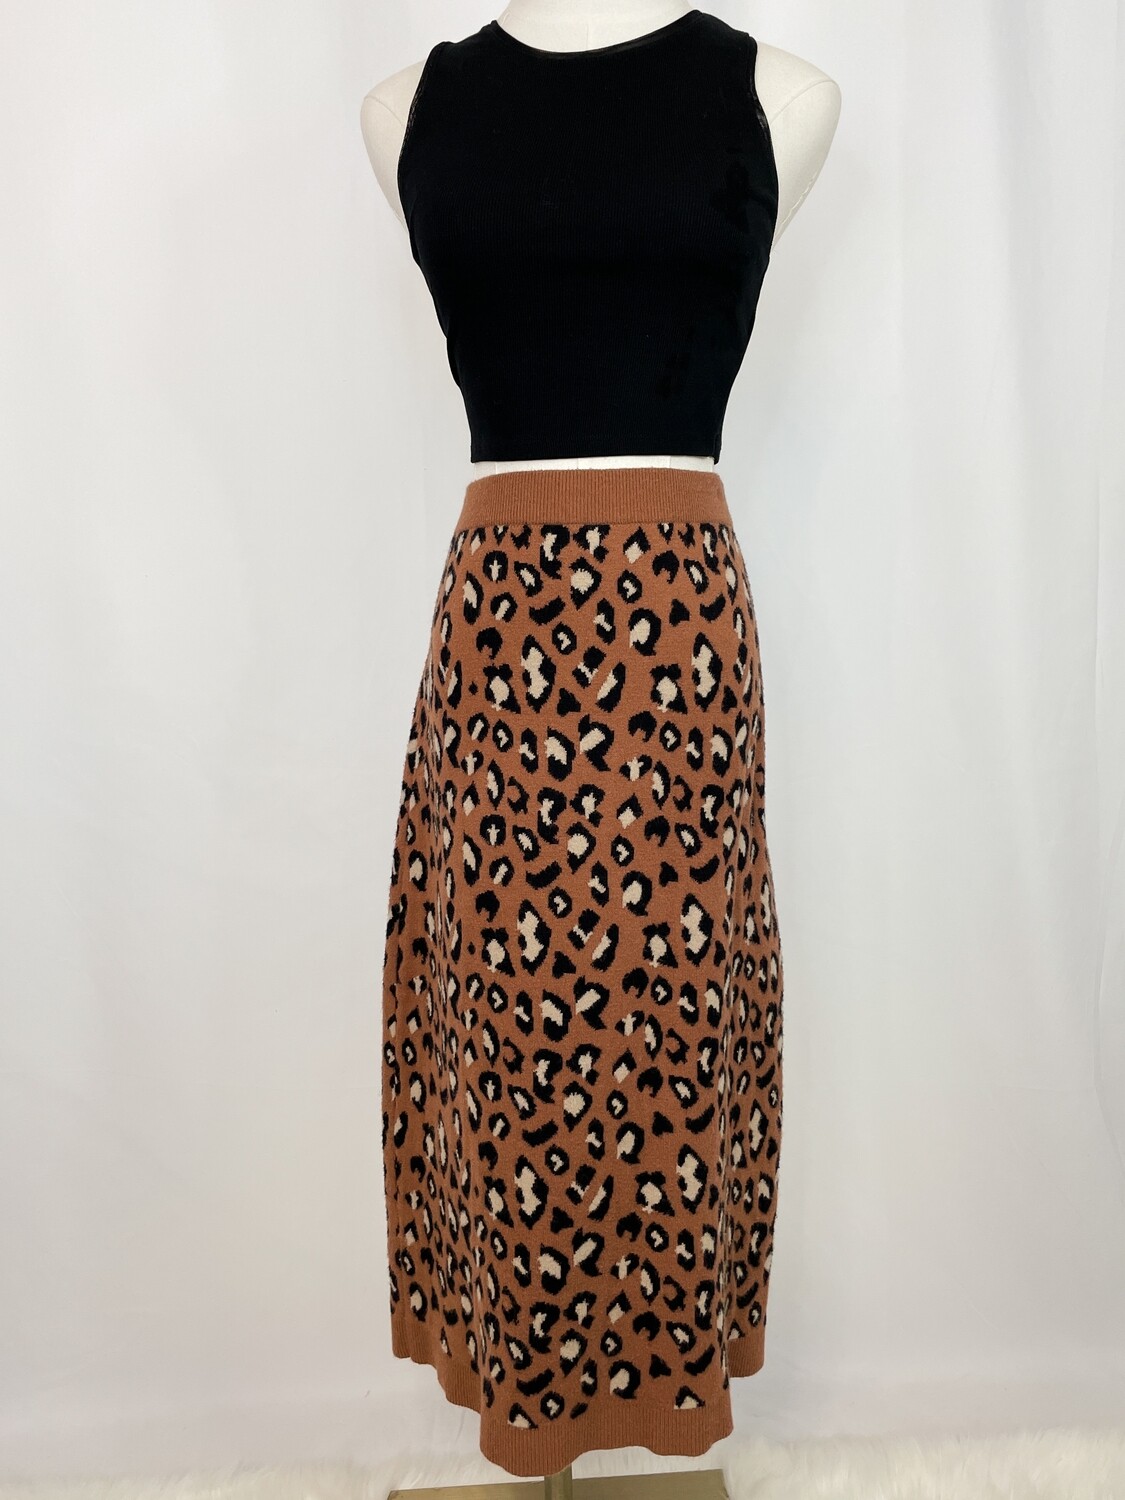 Halogen Leopard Print Skirt - Size 1